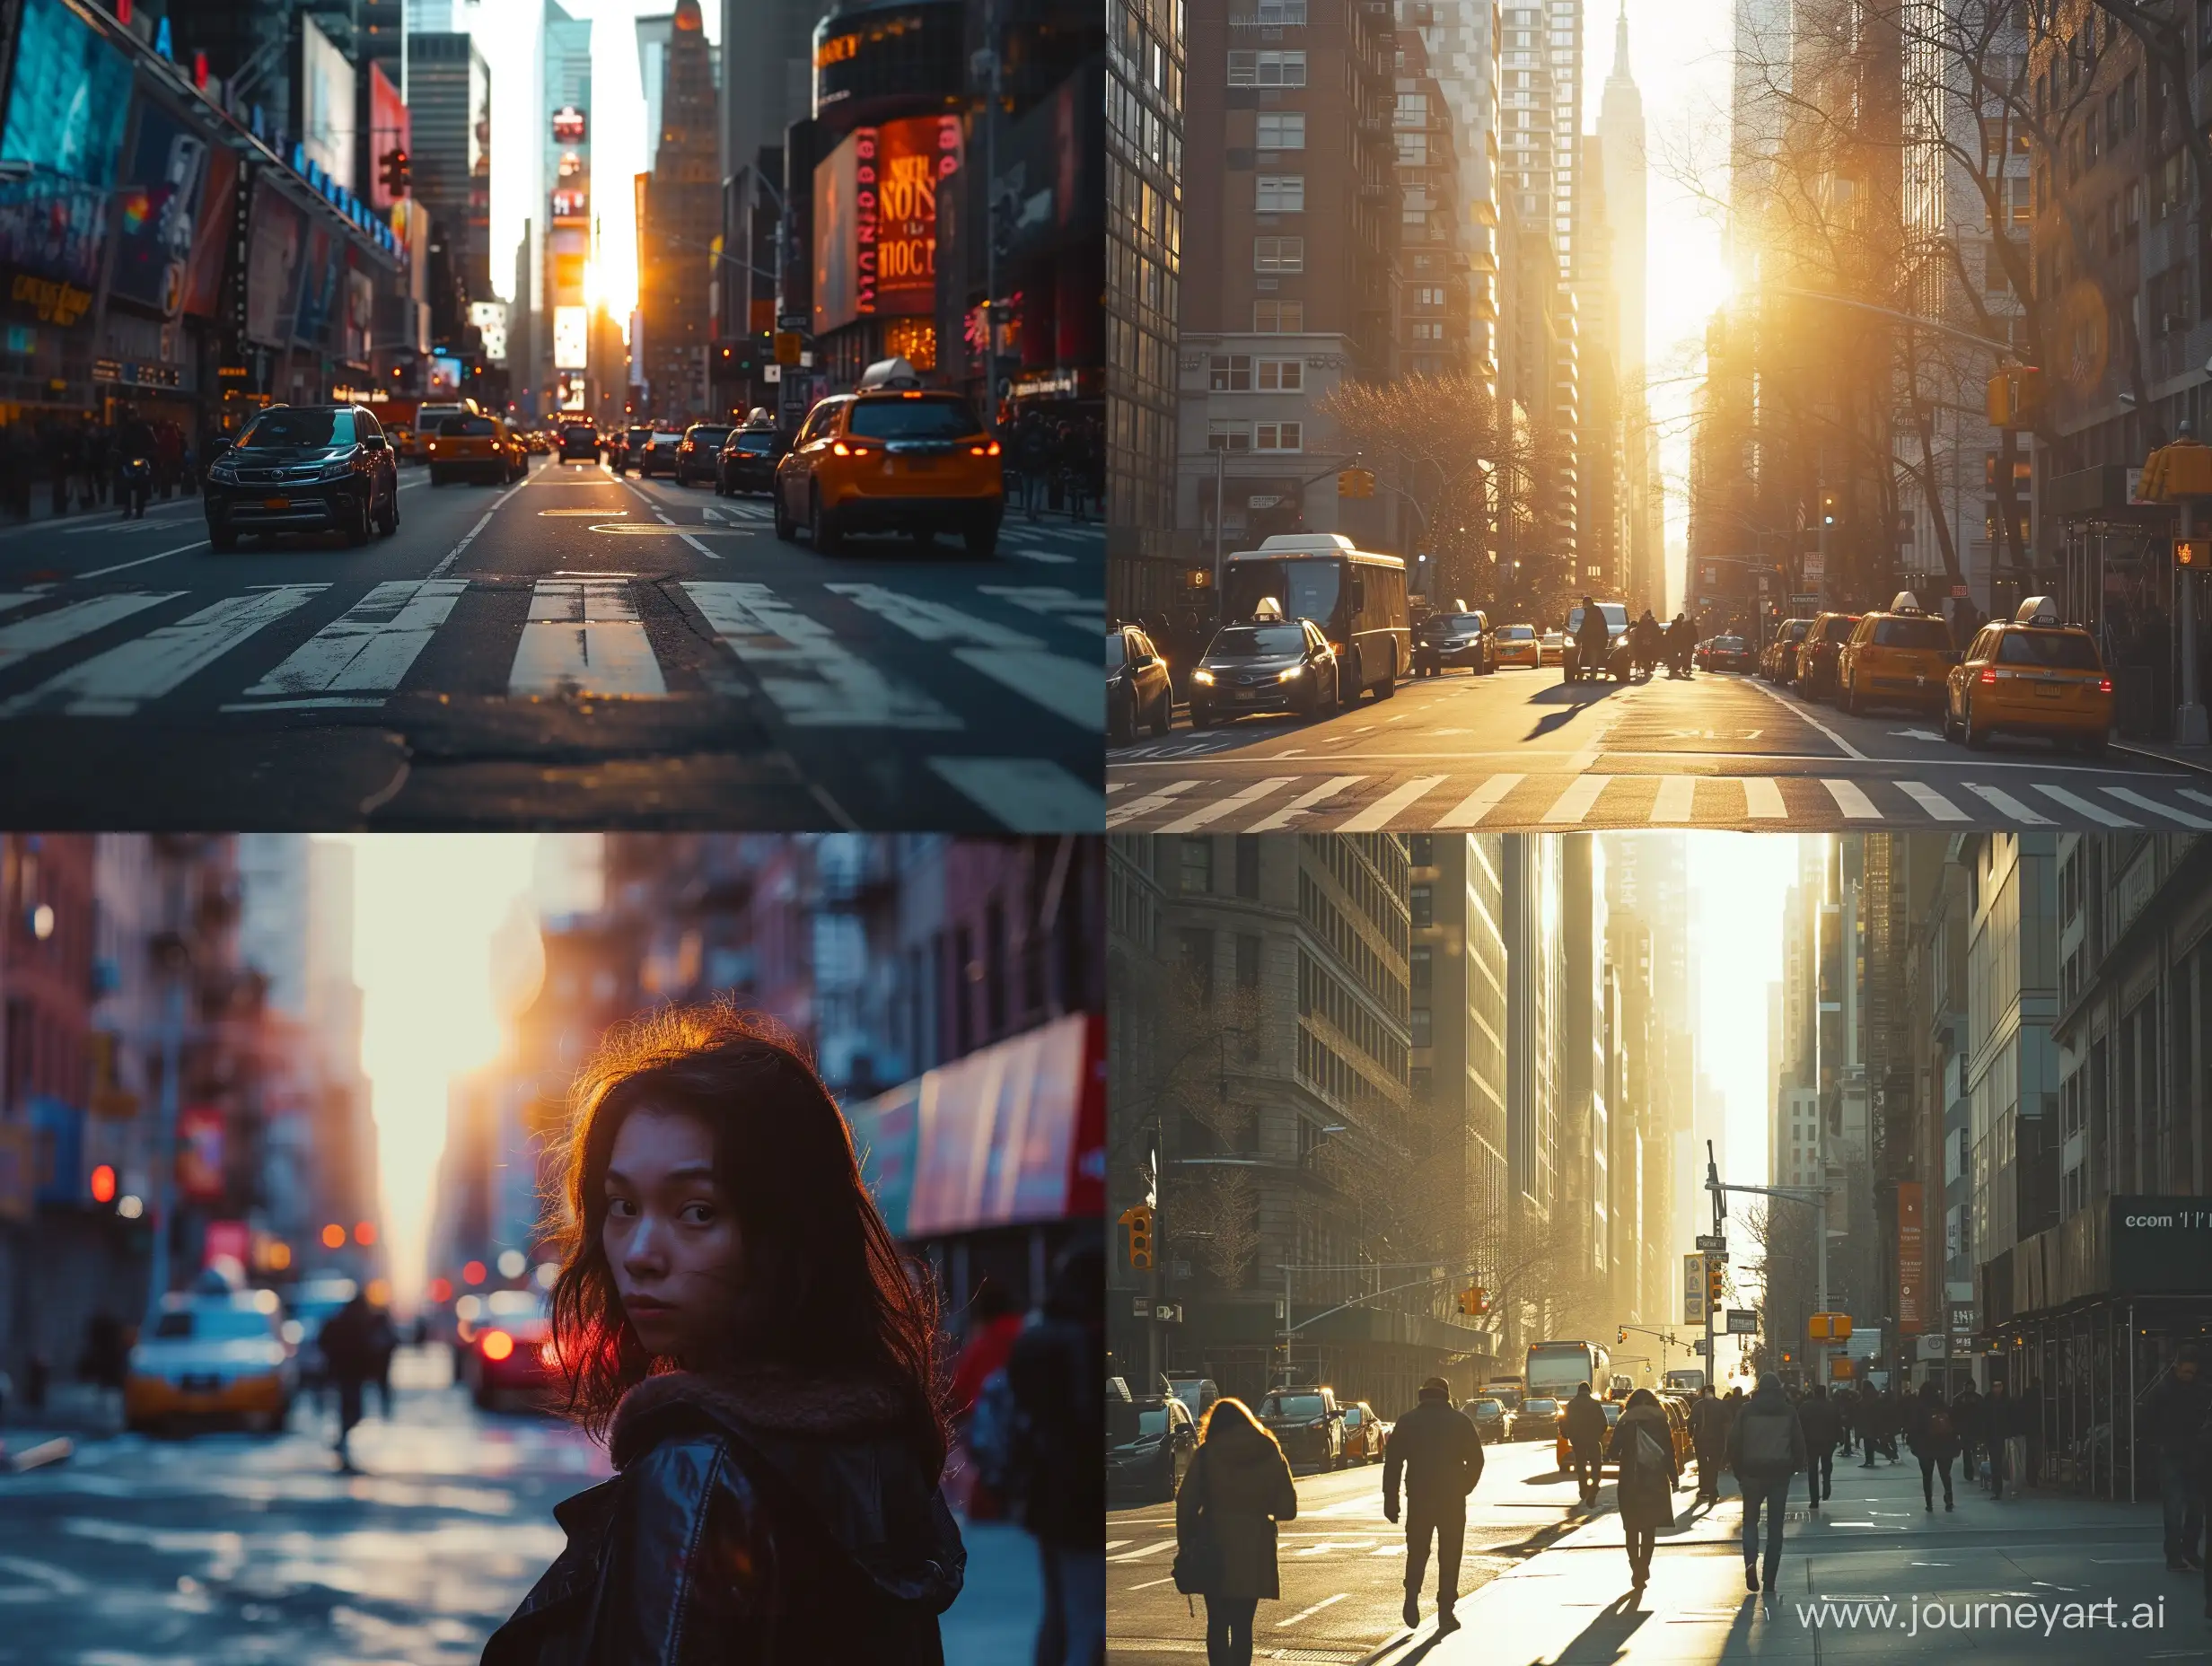 Vibrant-Daytime-Scene-of-New-York-City-in-4K-with-HighEnd-DSLR